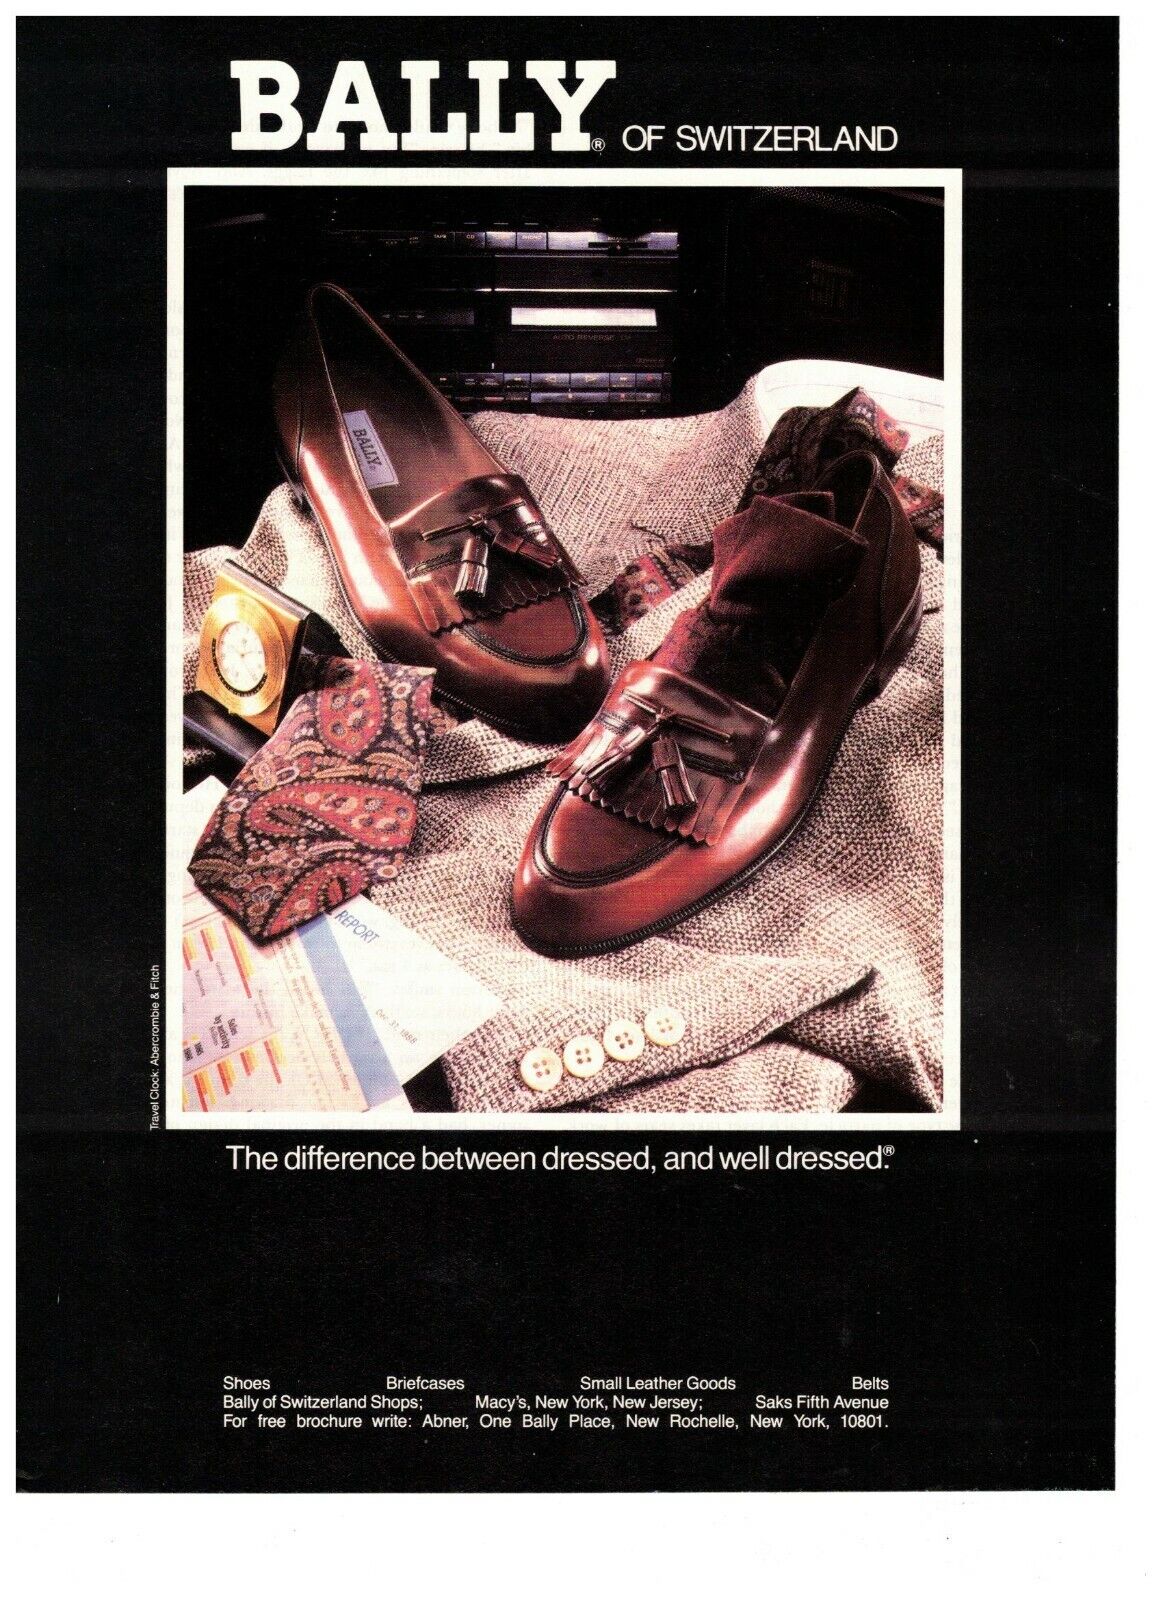 1989 Bally Switzerland Formal Men's Fashion Loafers Vintage Print Advertisement